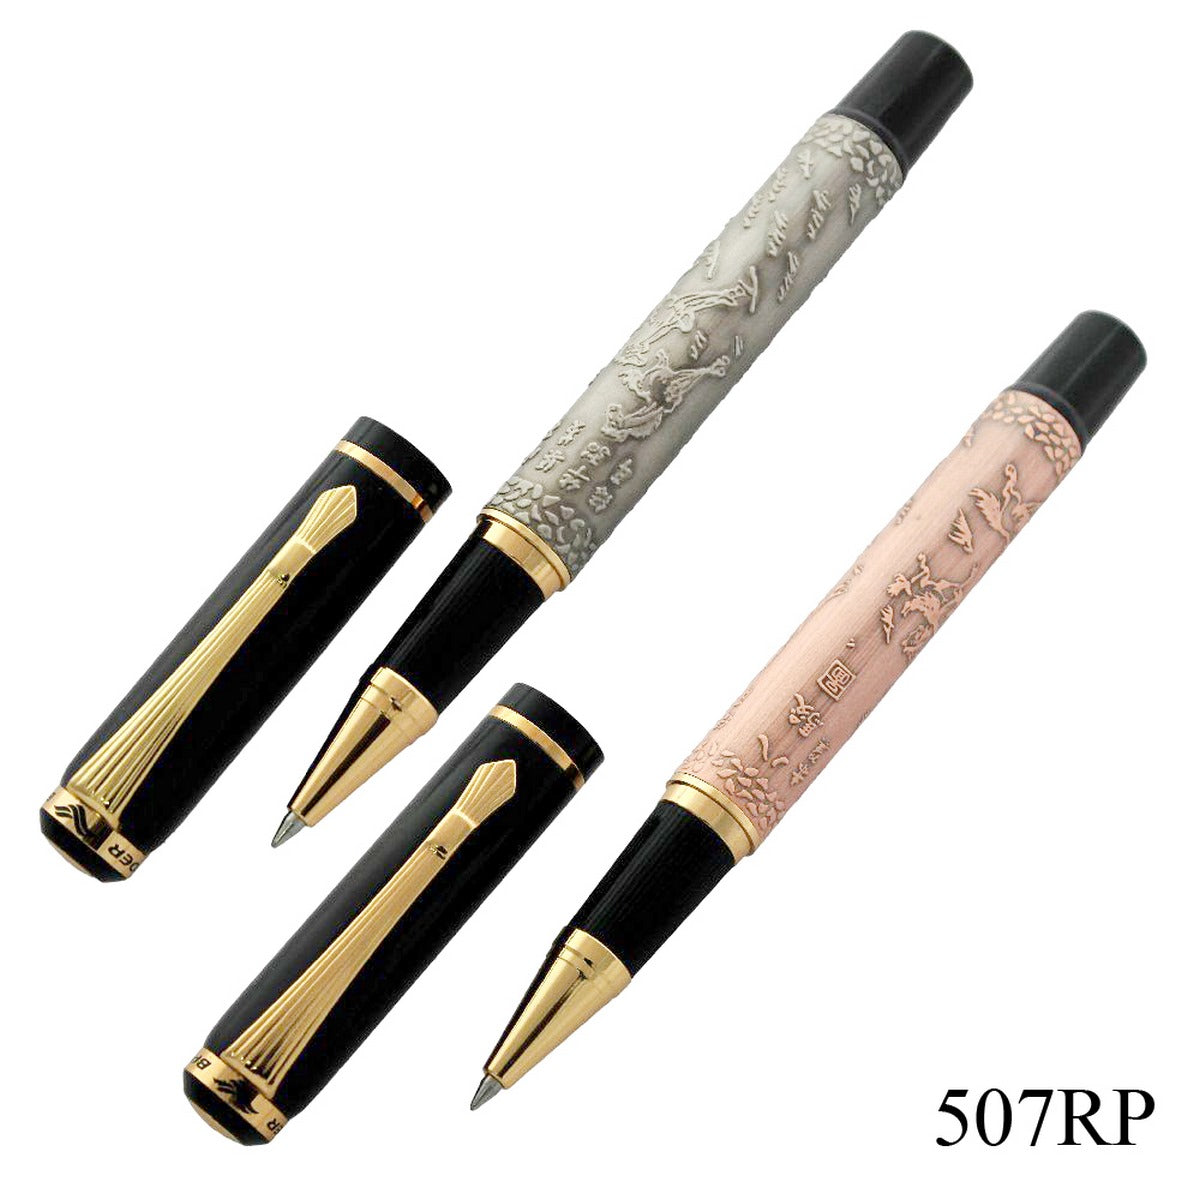 jags-mumbai Roller Pens "Smooth Writing Experience - Roller Pen 507RP"